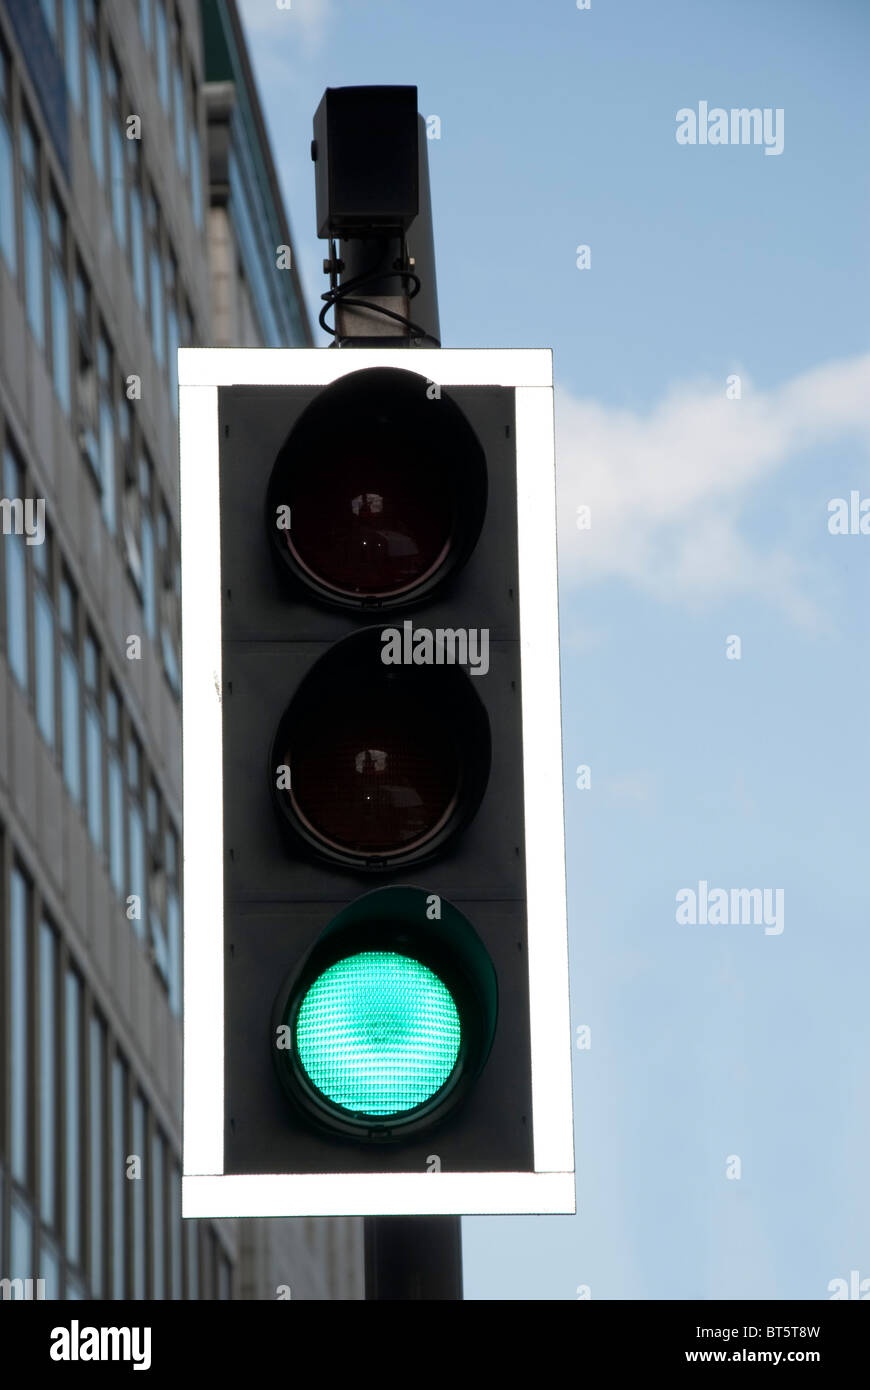 traffic light with green light Stock Photo